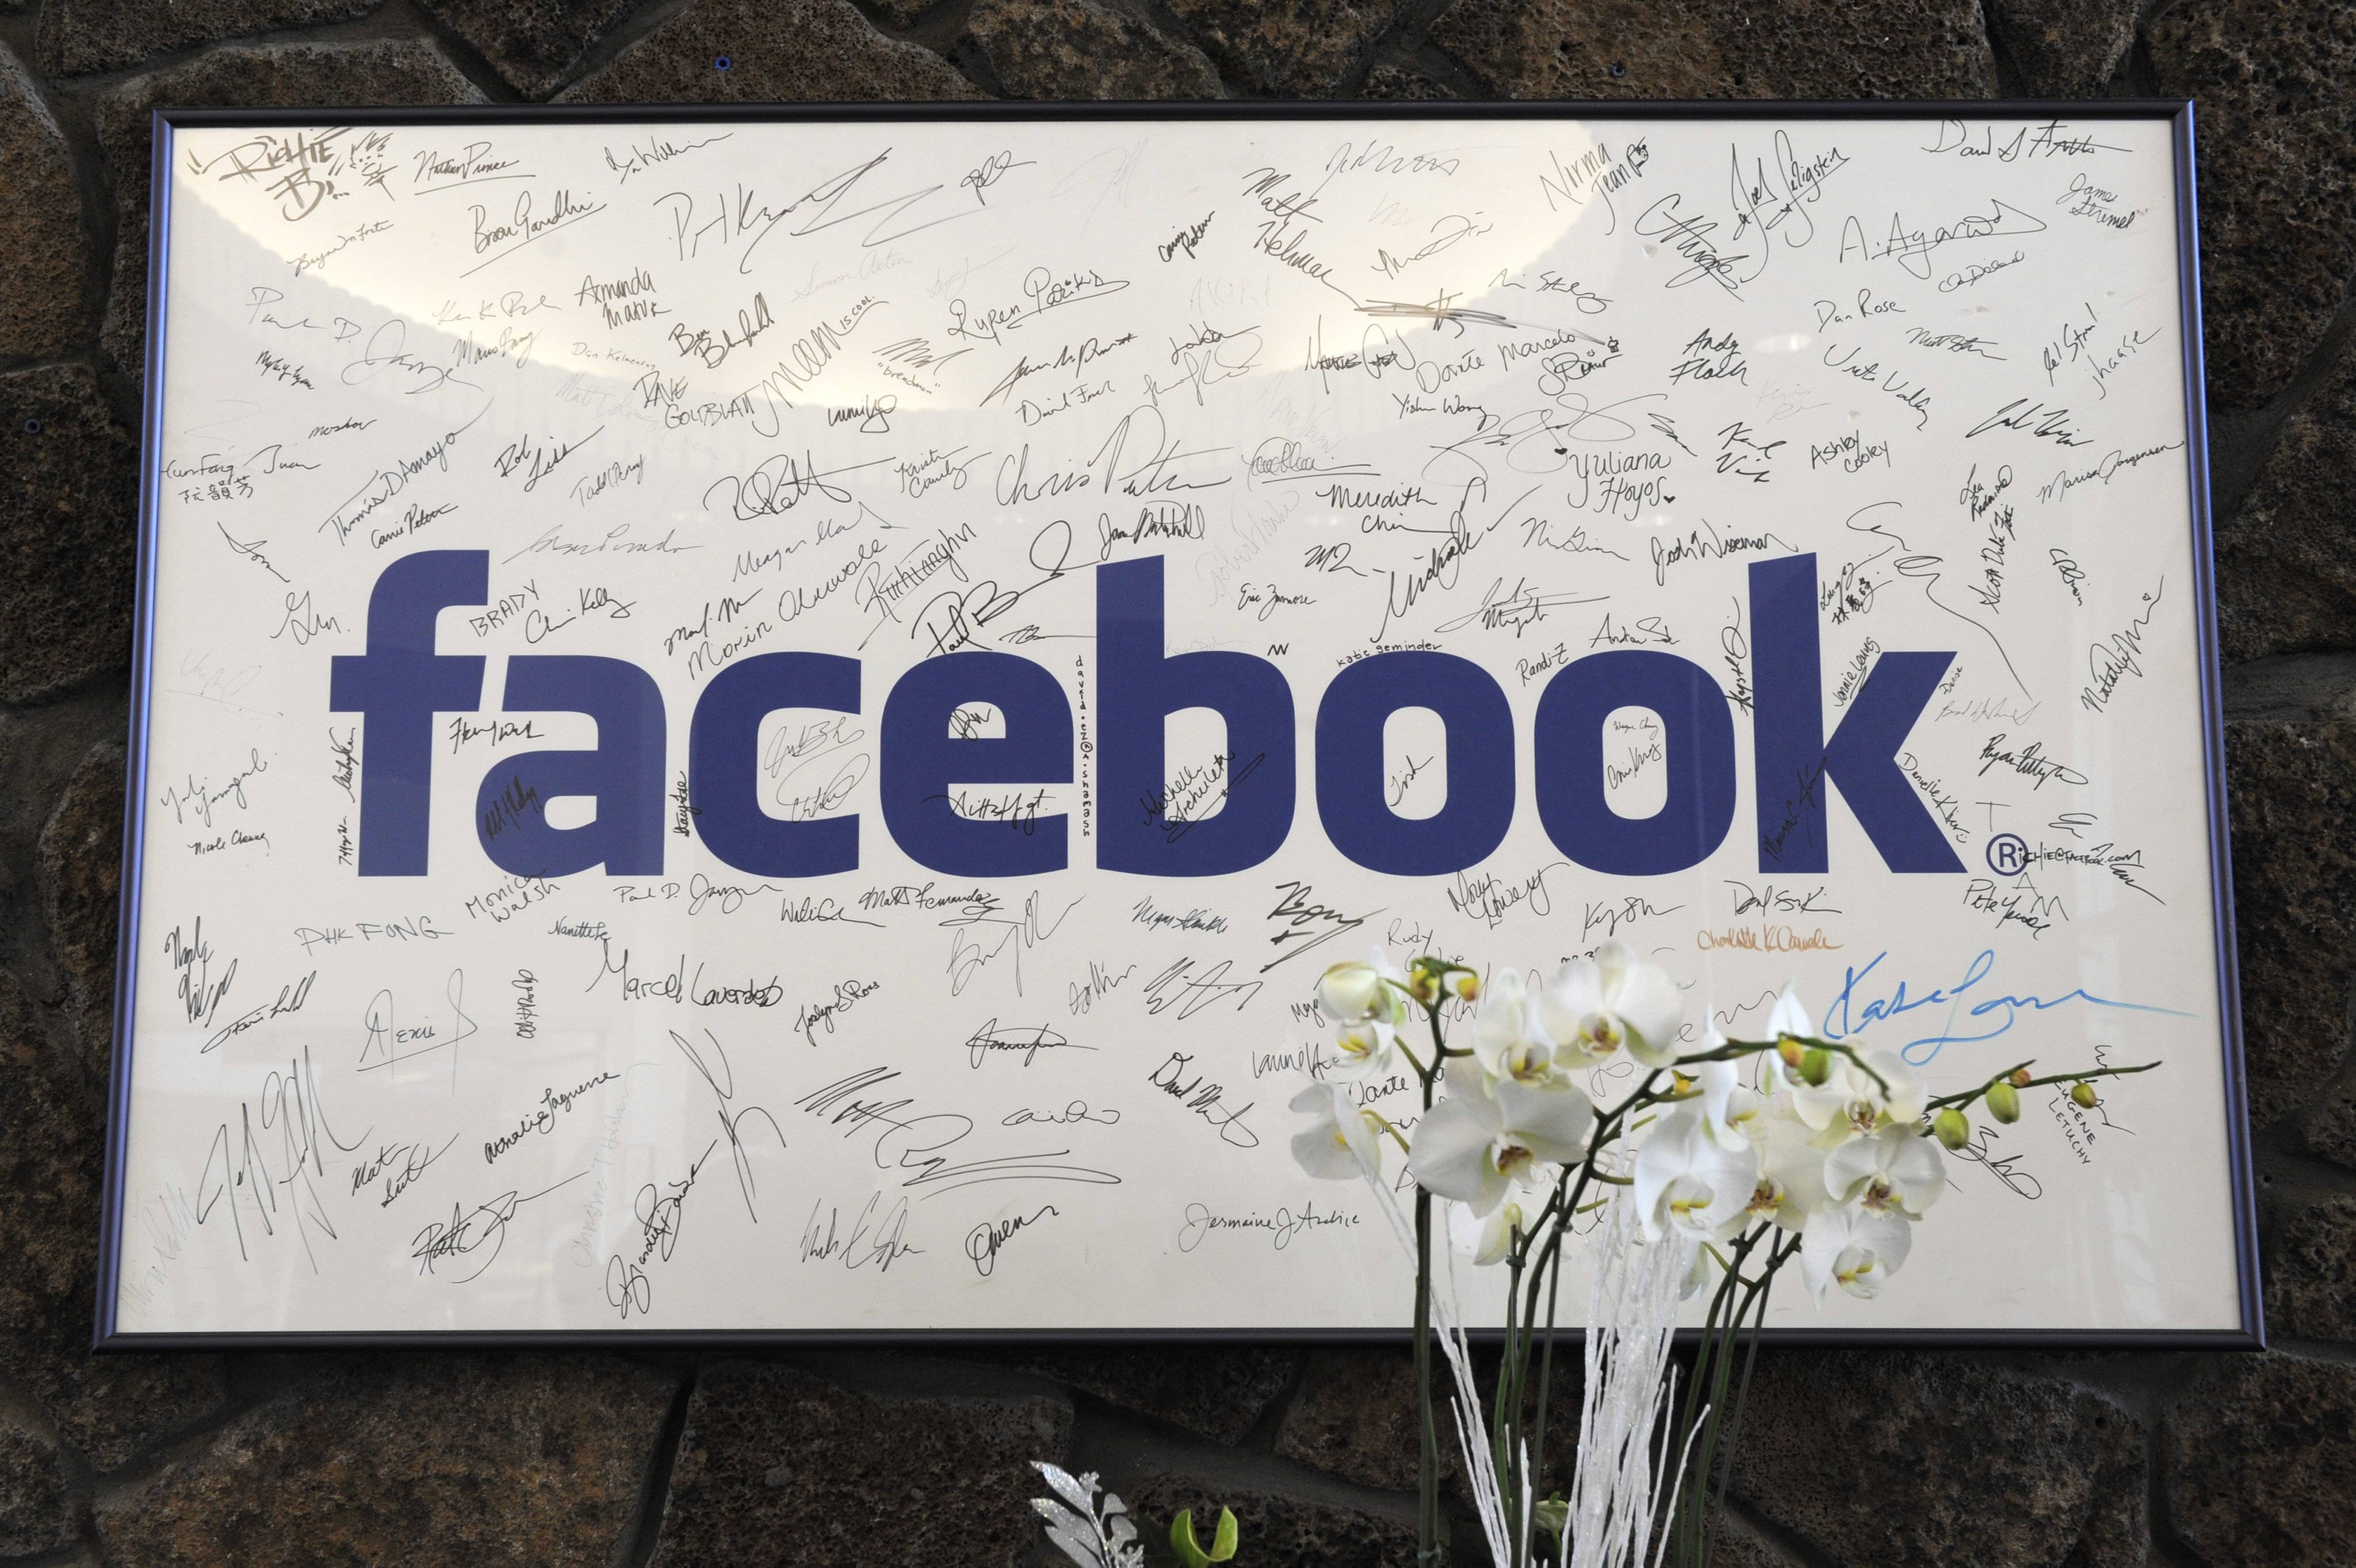 83 милиона профила във Facebook са фалшиви